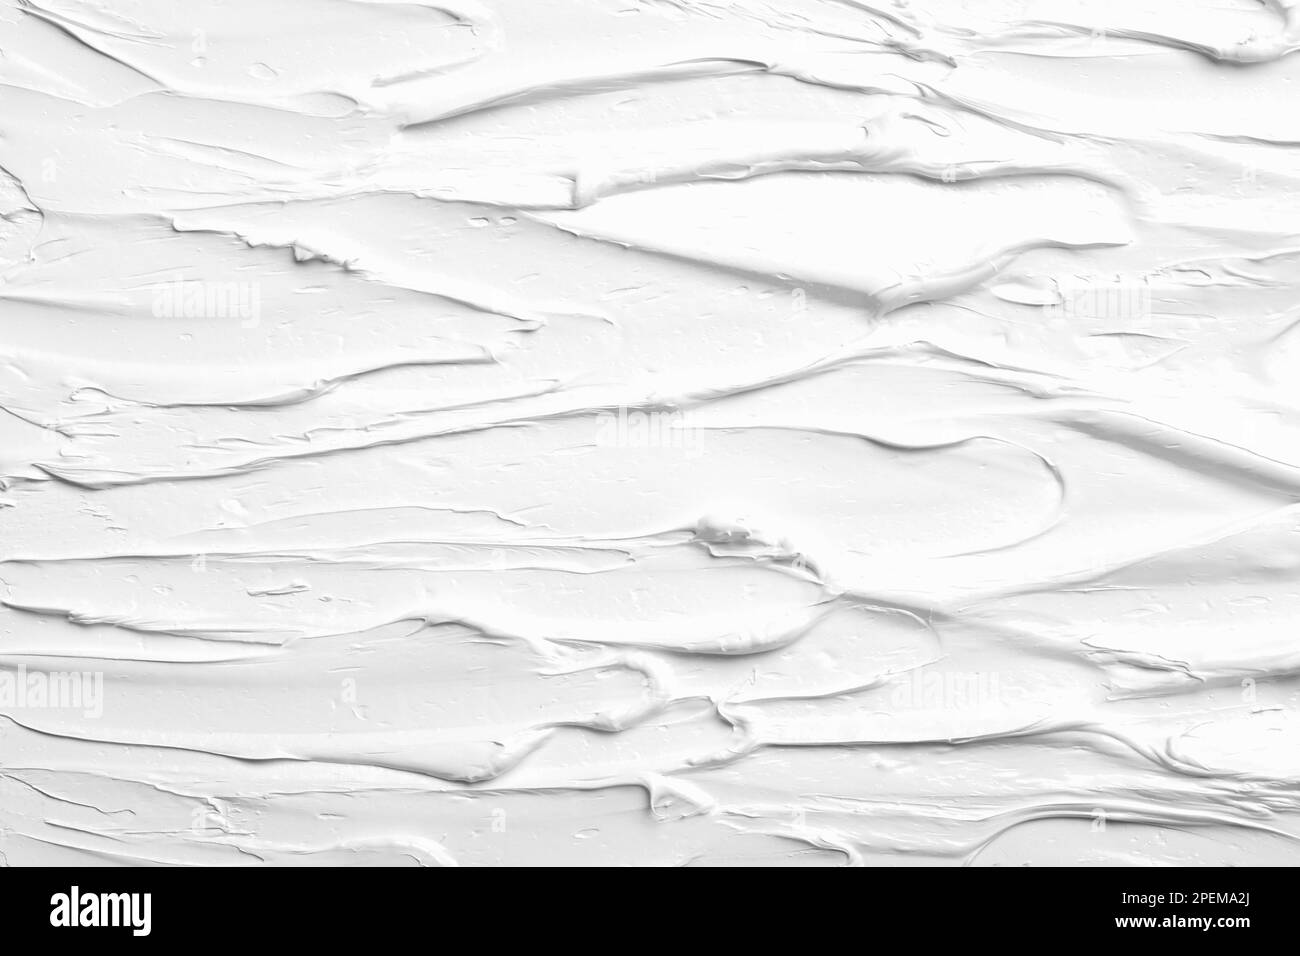 White tempera paint on cardboard Stock Photo - Alamy